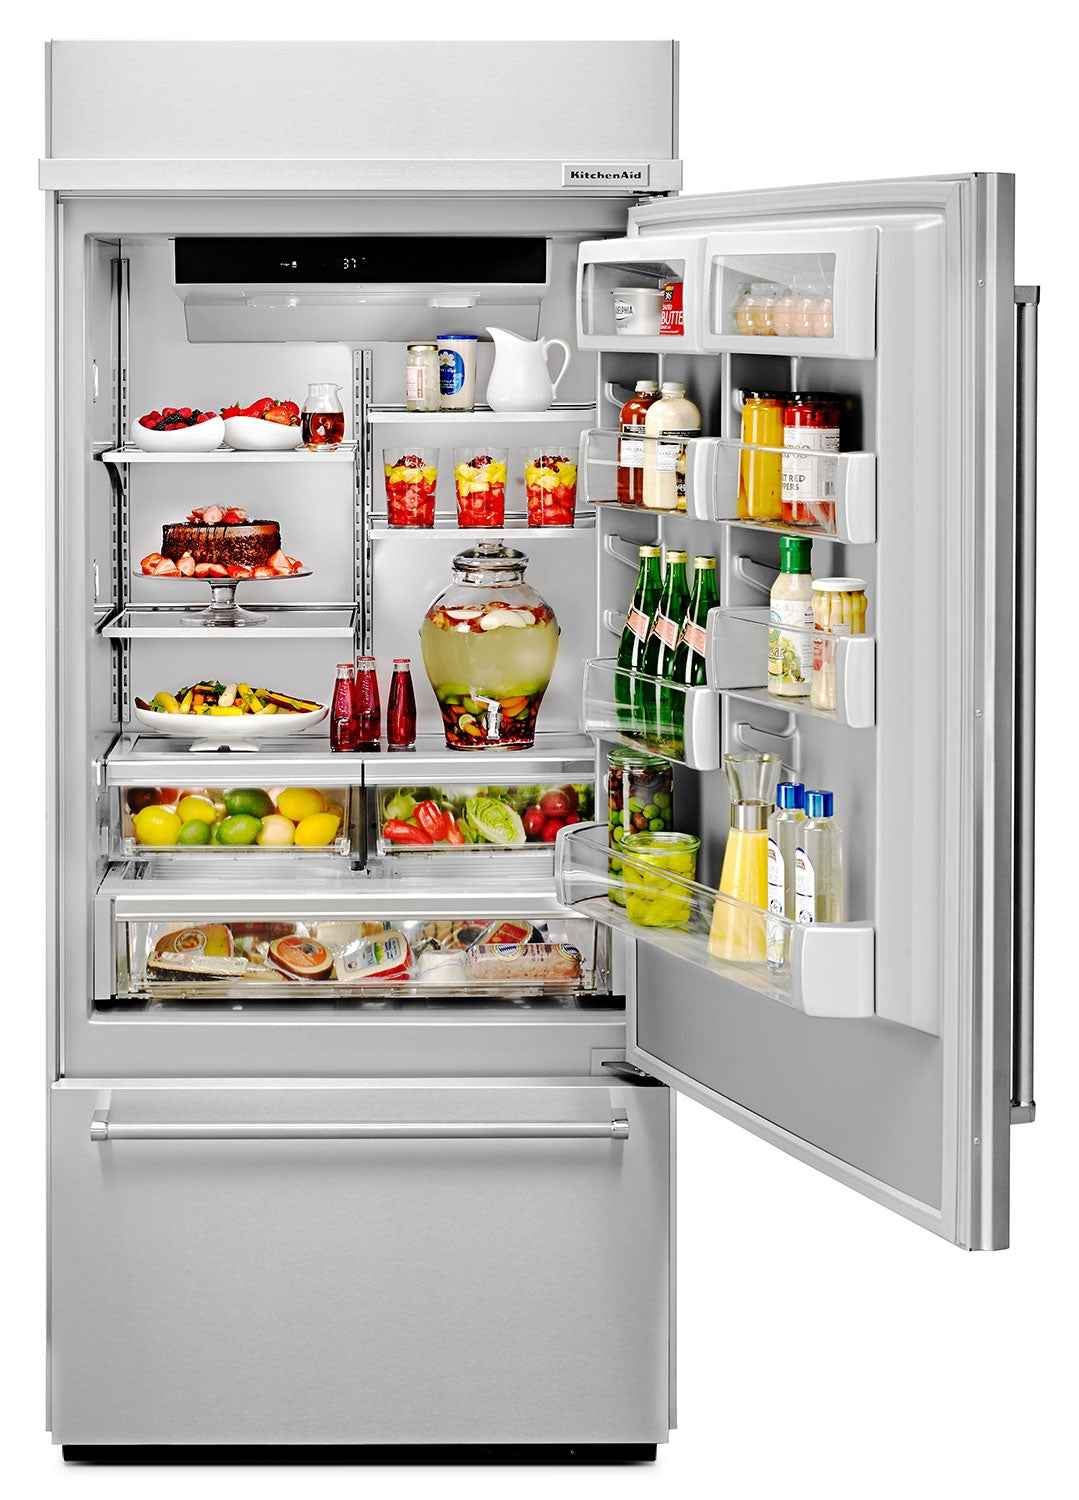 KitchenAid Stainless Steel Bottom-Freezer Refrigerator (20.9 Cu. Ft.)  - KBBR306ESS